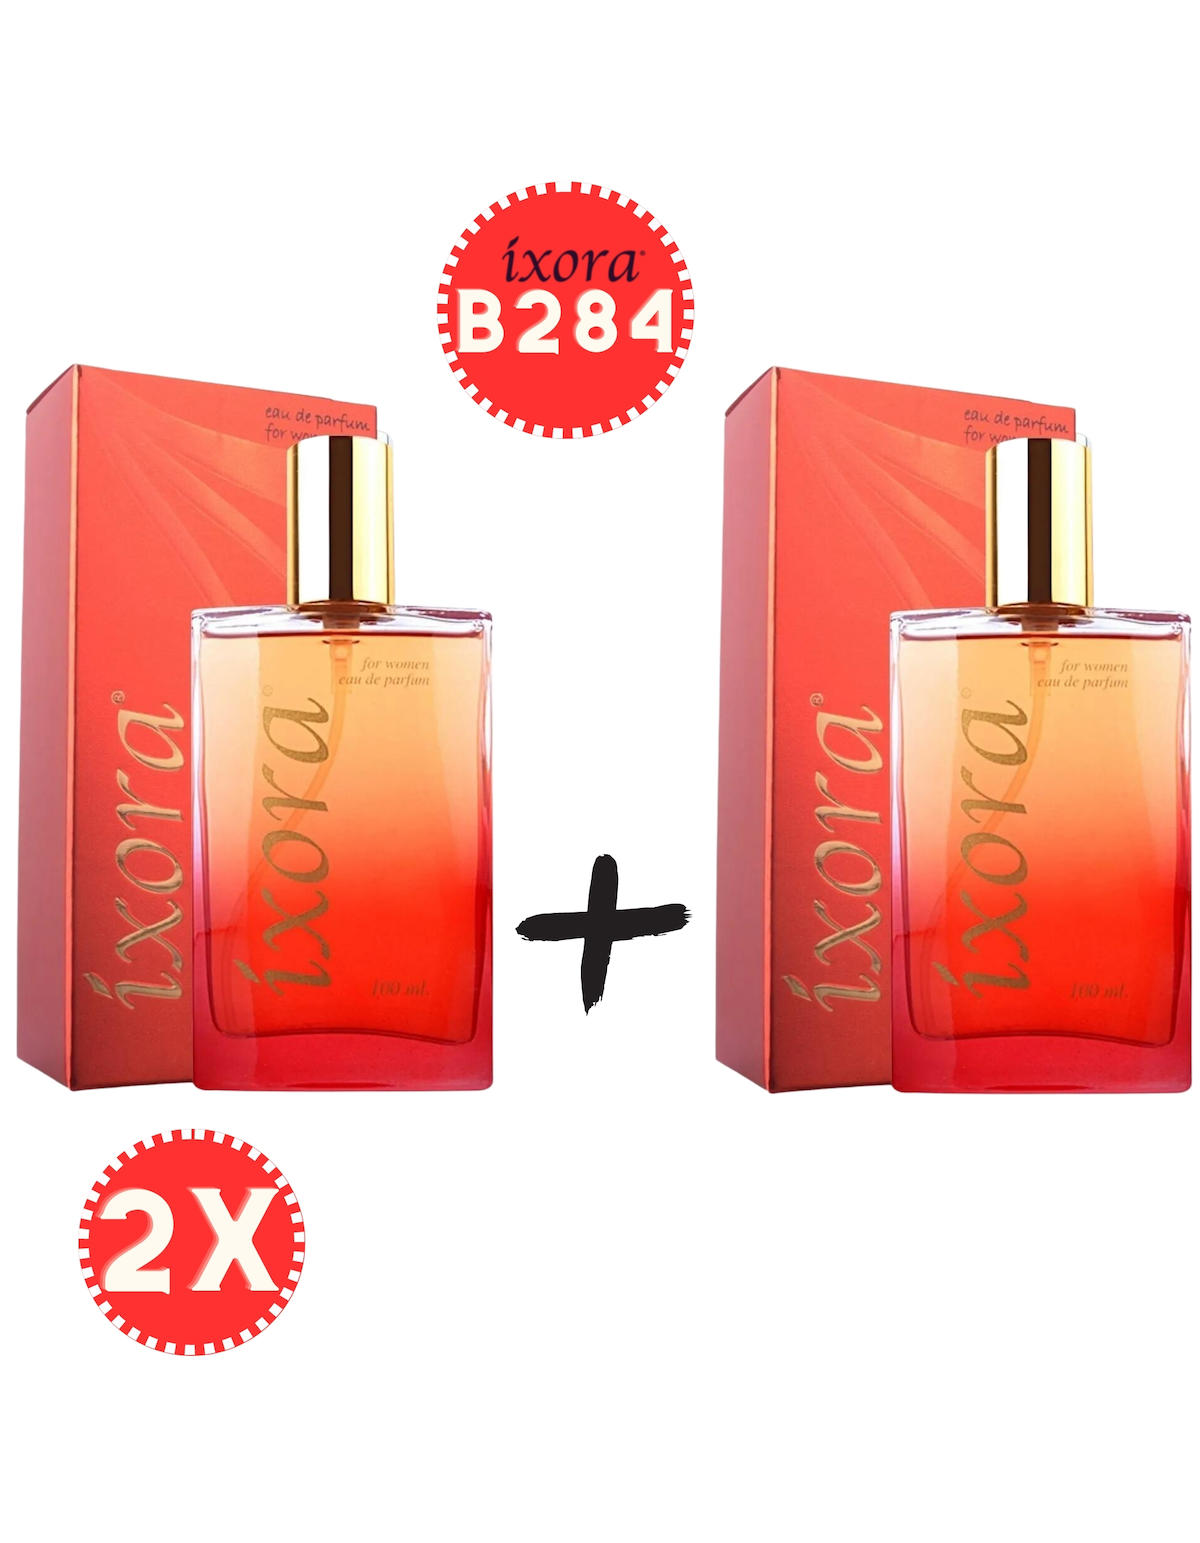 İxora B284 Fantastic EDP Meyvemsi Kadın Parfüm 2x100 ml